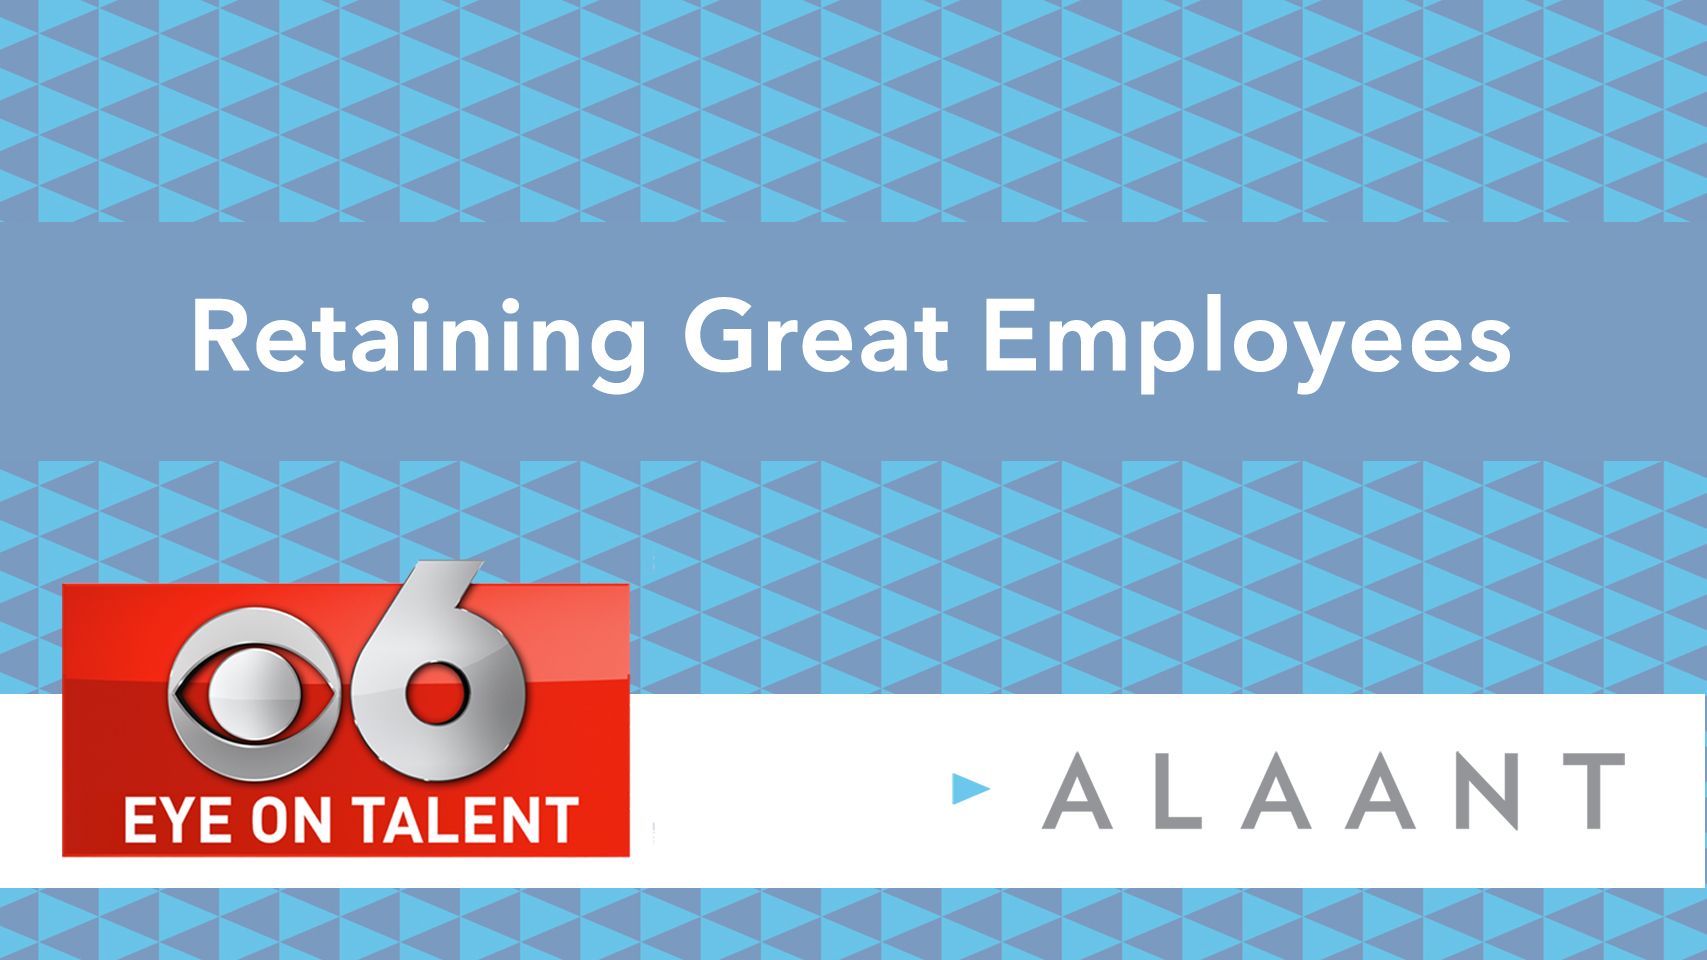 Alaant Eye on Talent Retaining Great Employees